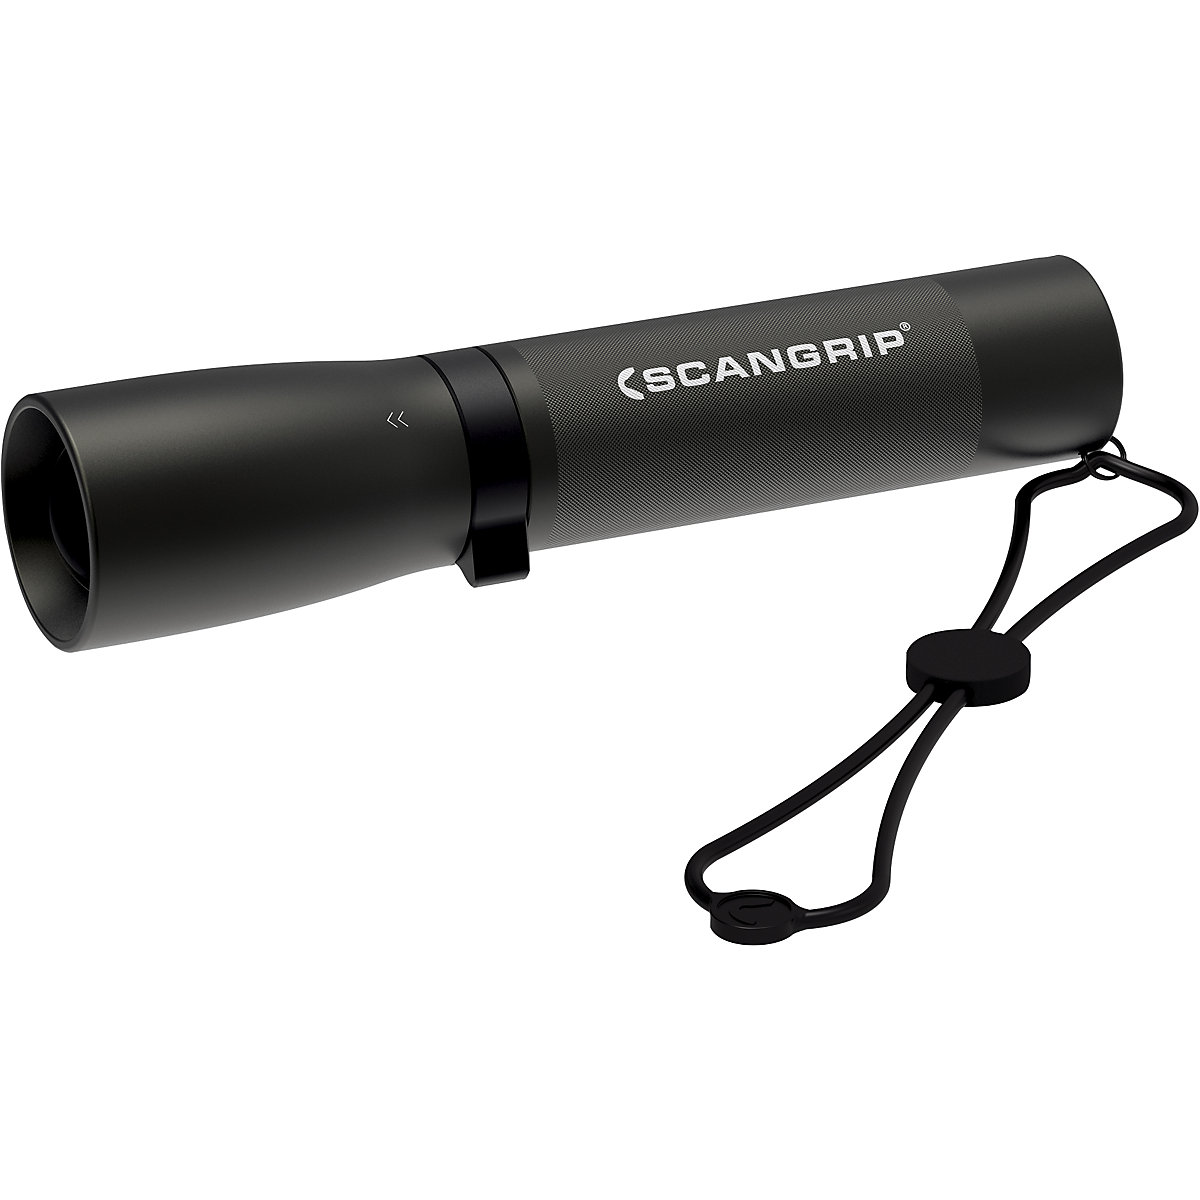 FLASH 1000 R rechargeable flashlight – SCANGRIP